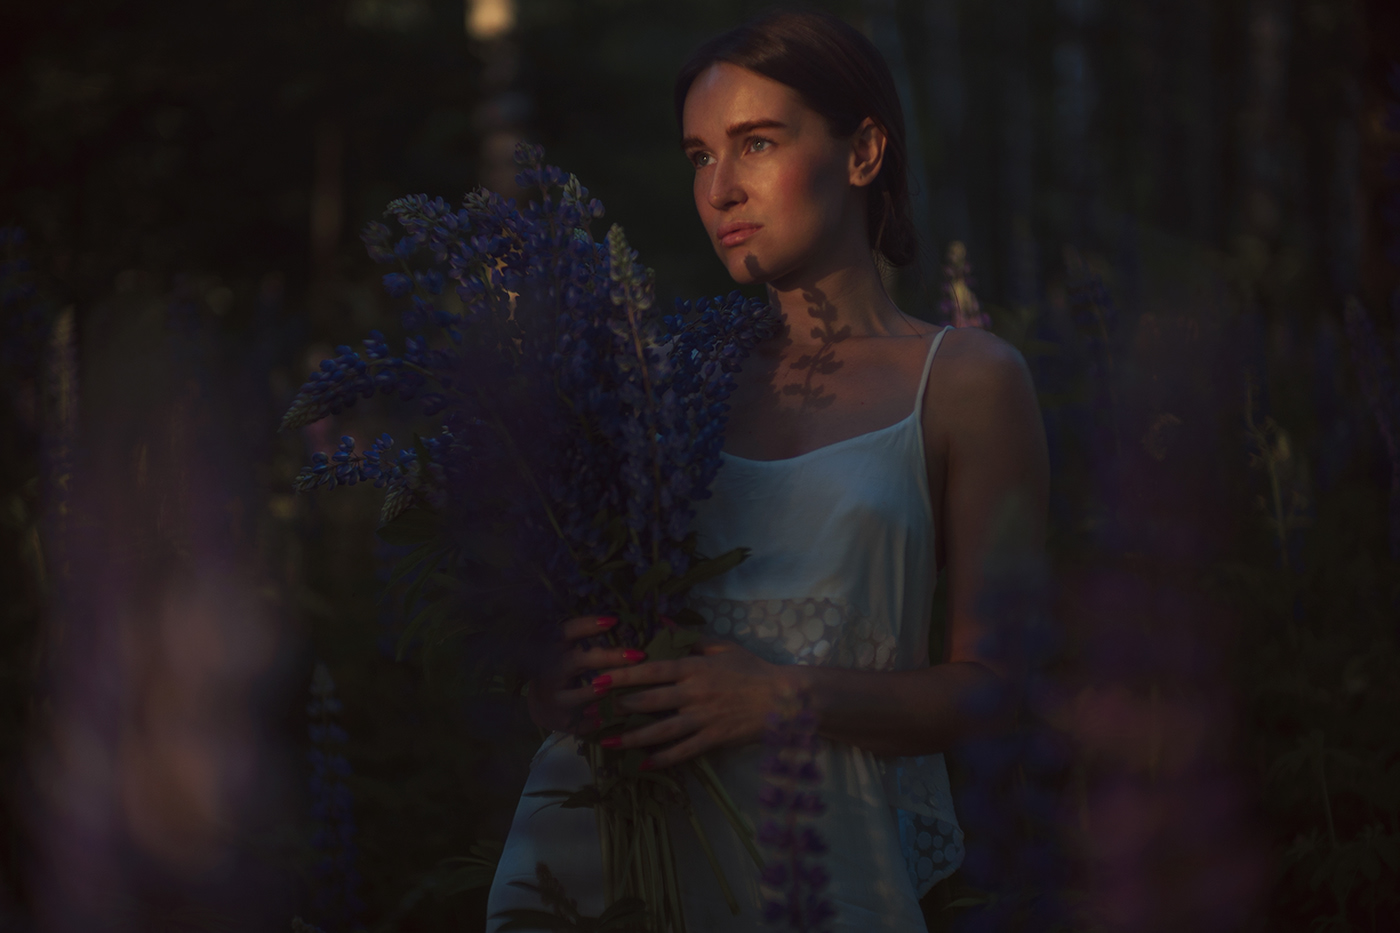 Nature portrait sunlight Flowers girl model models Sensuality sexy Fashion 